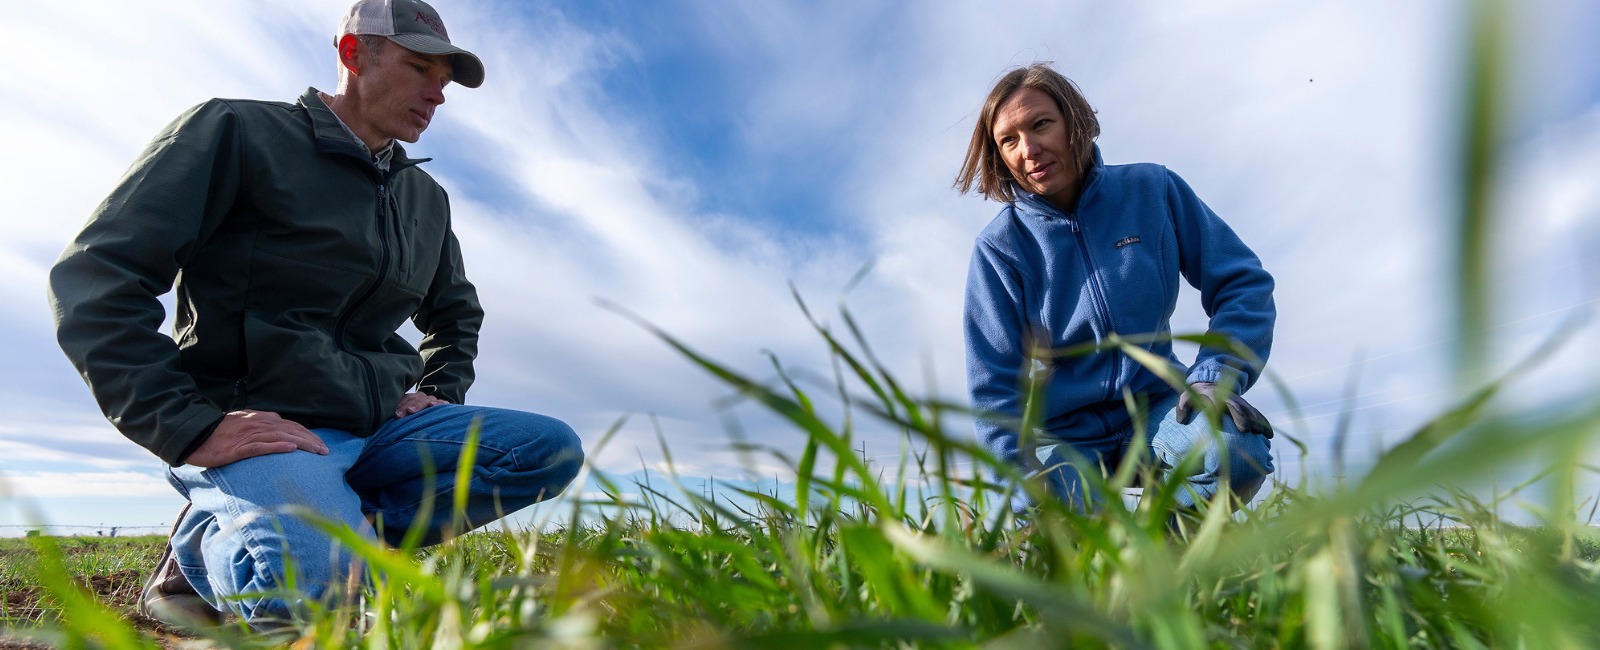 two people kneeling in field of green and skies of blue